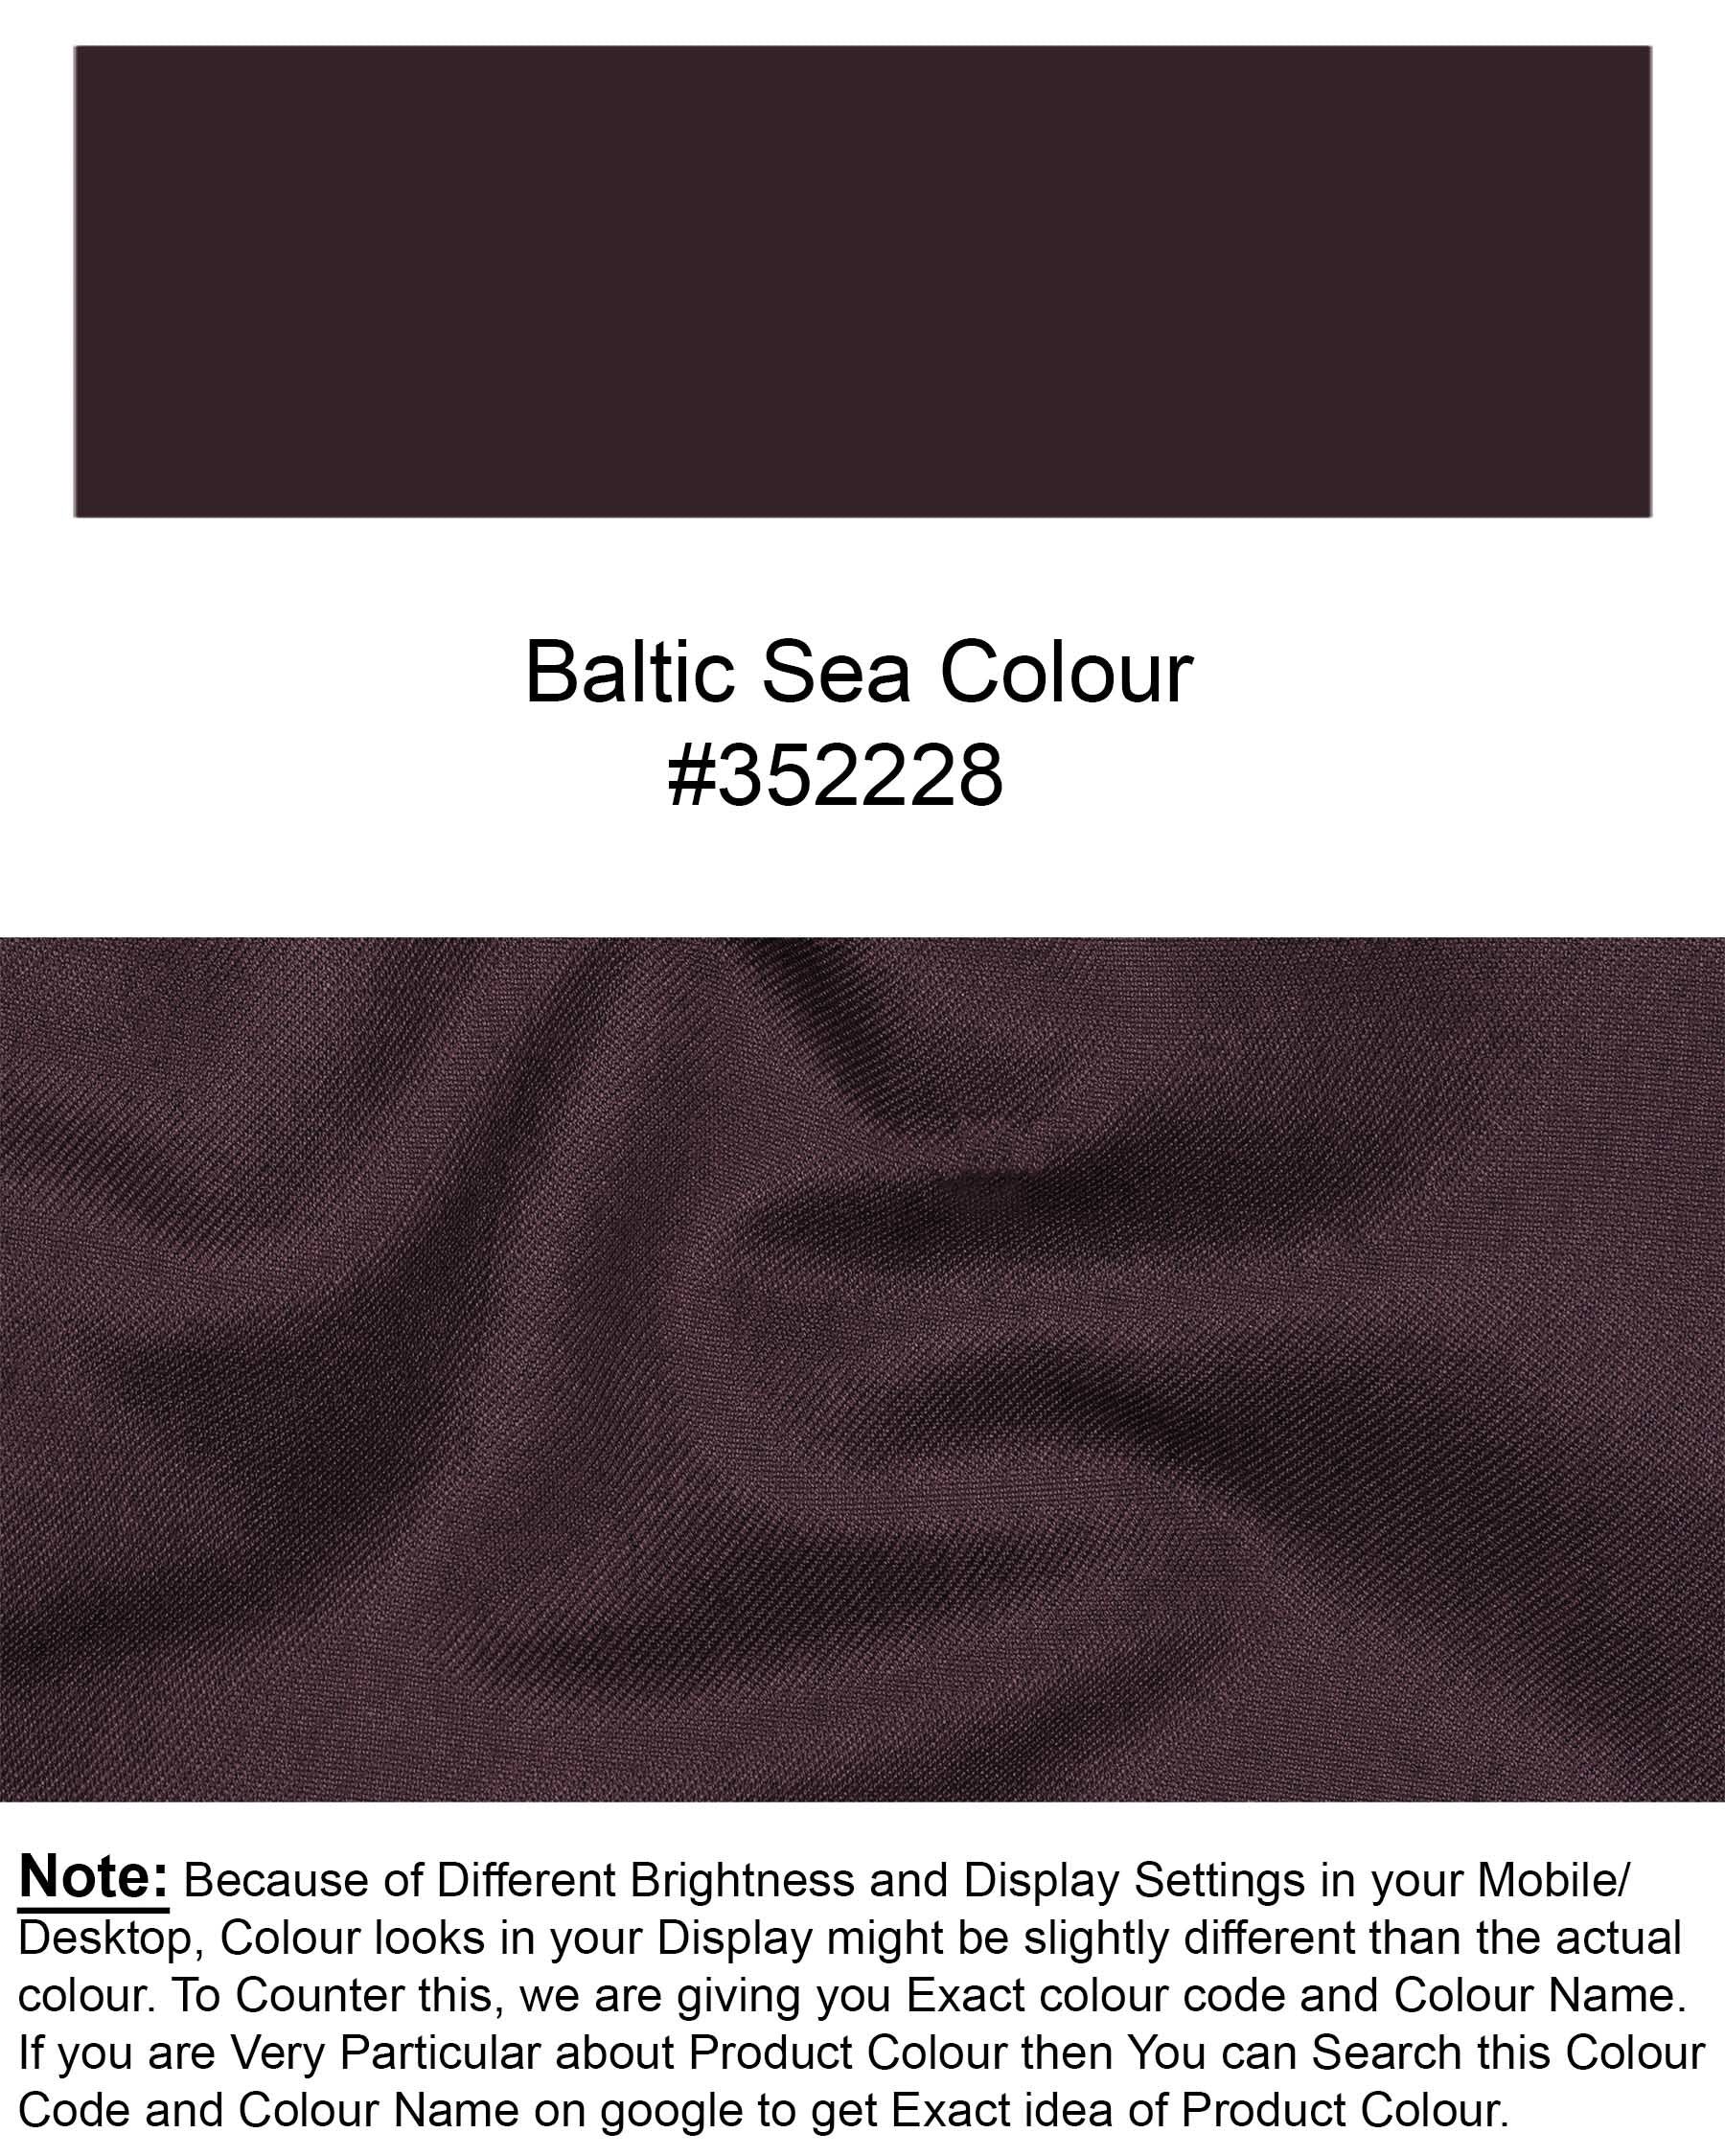 Baltic Sea Single Breasted Blazer BL1914-SB-36,BL1914-SB-38,BL1914-SB-40,BL1914-SB-42,BL1914-SB-44,BL1914-SB-46,BL1914-SB-48,BL1914-SB-50,BL1914-SB-52,BL1914-SB-54,BL1914-SB-56,BL1914-SB-58,BL1914-SB-60